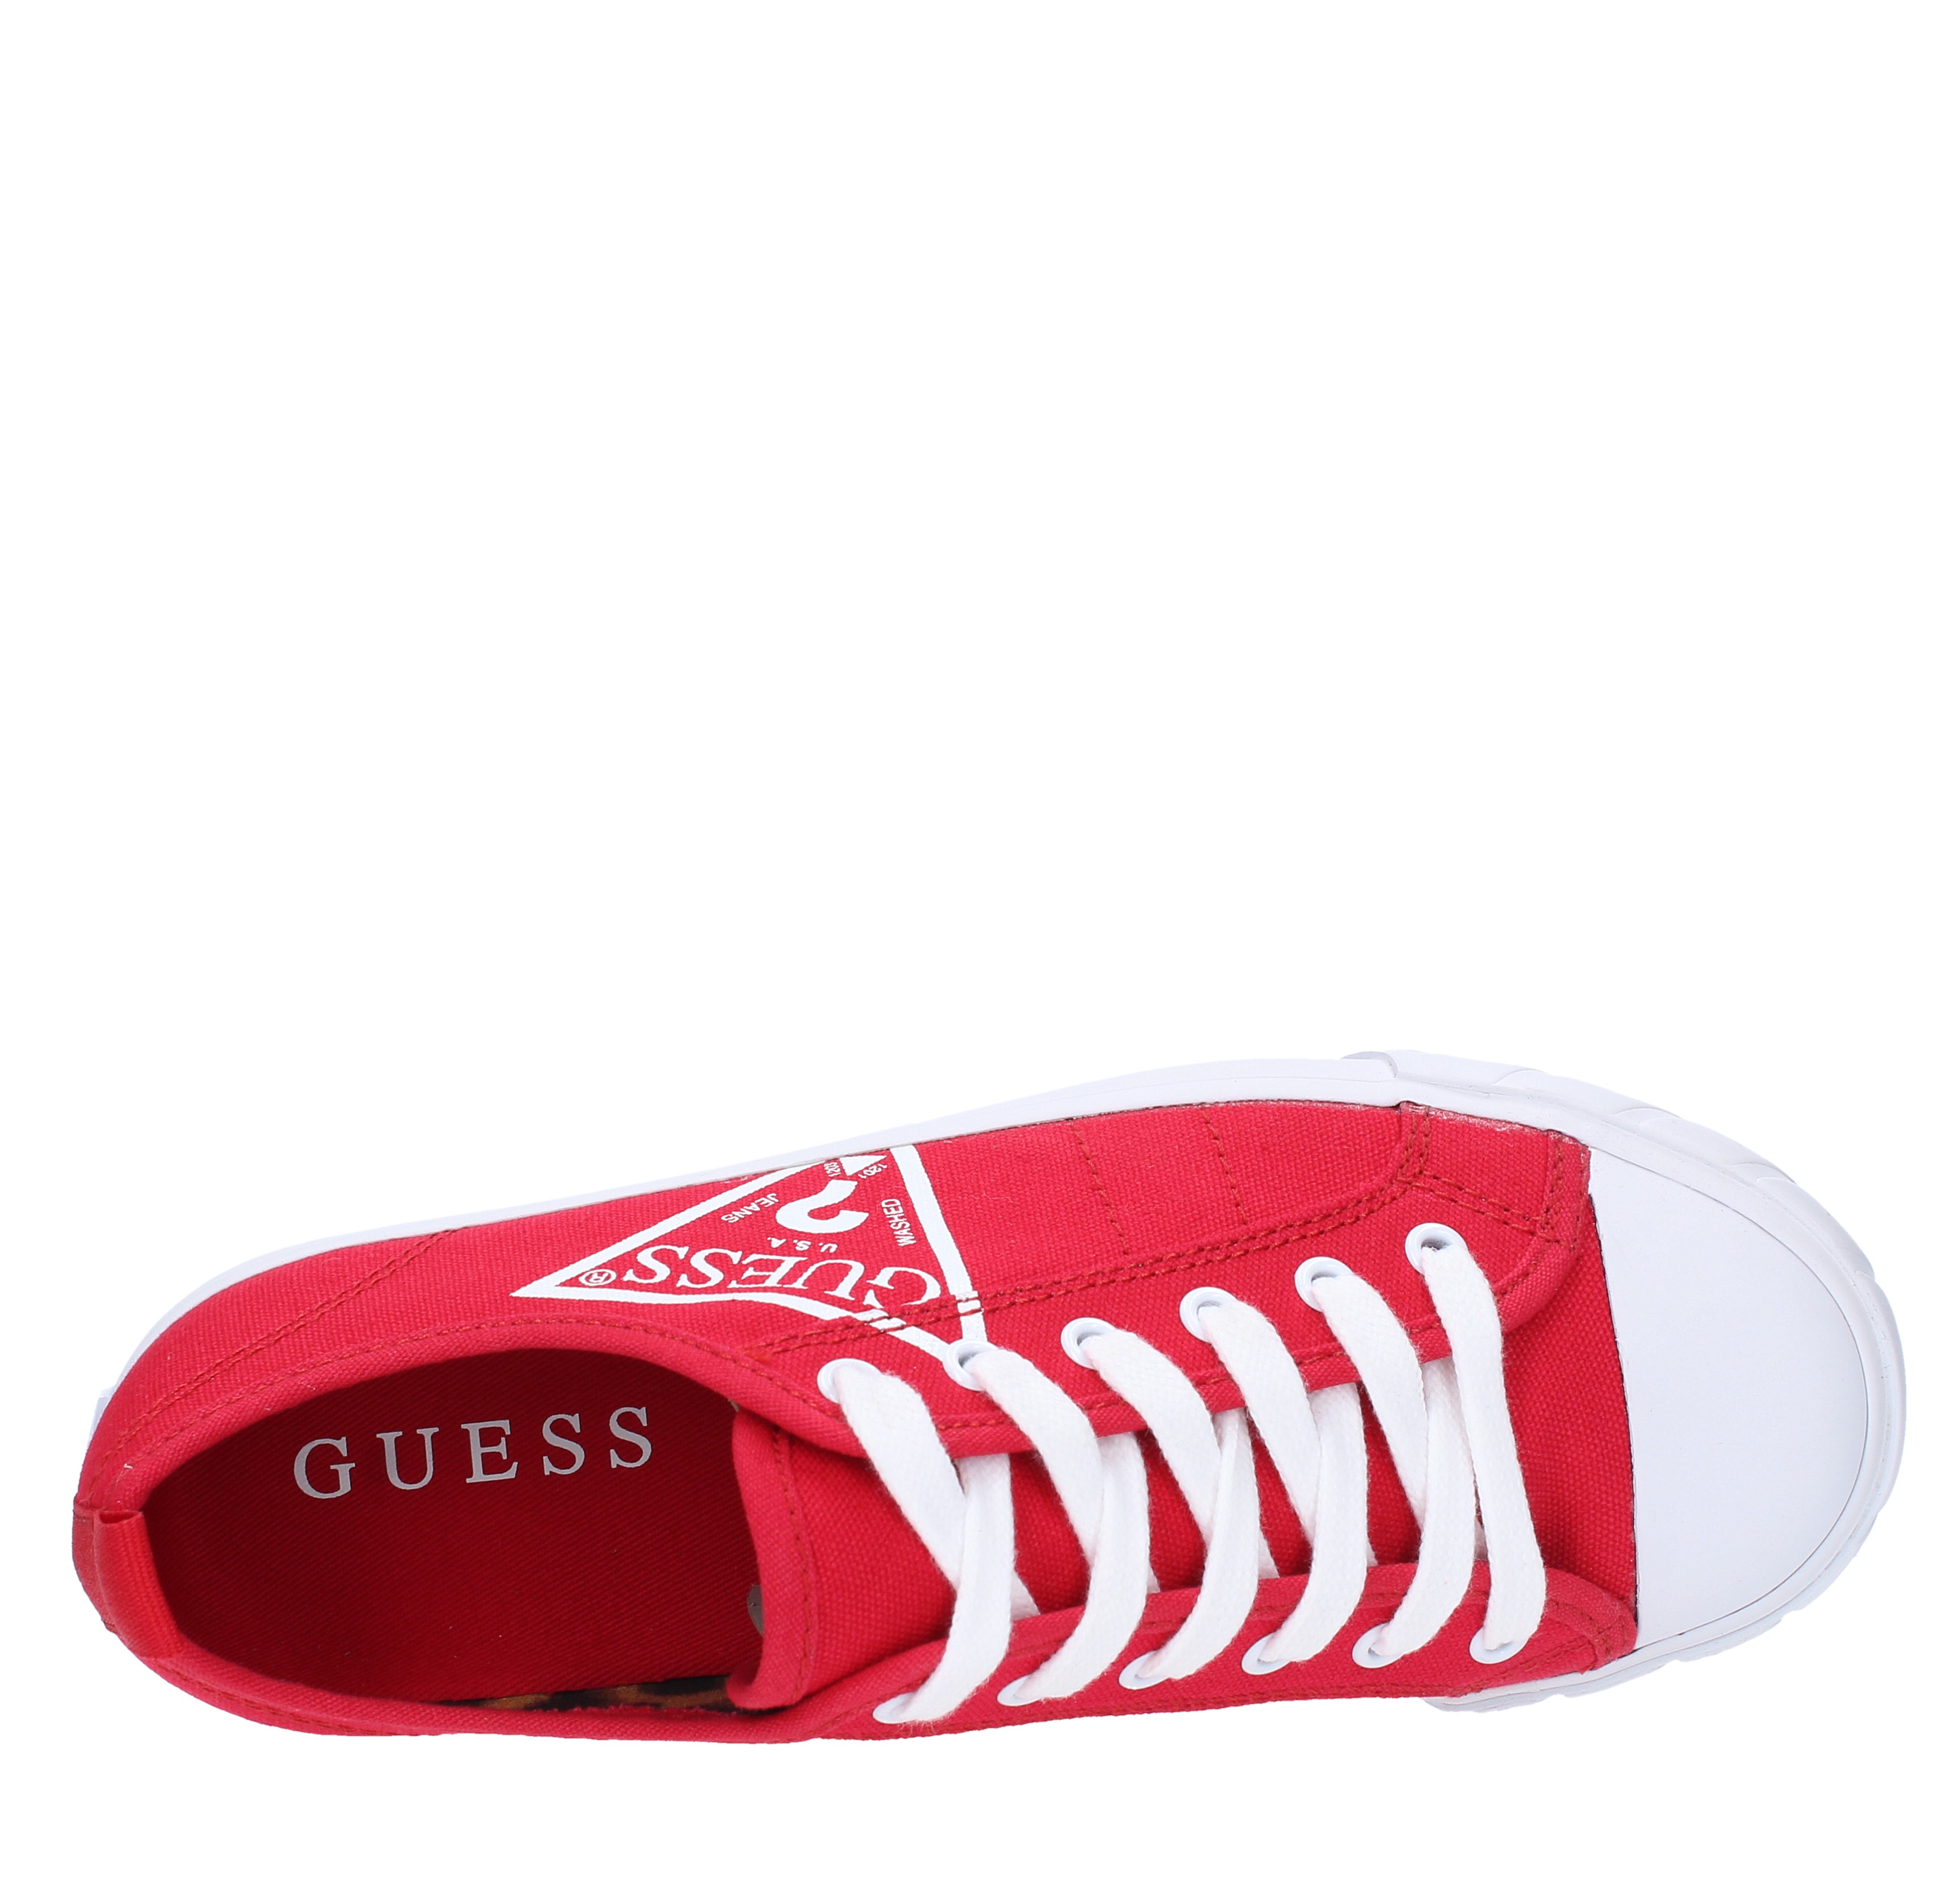 Sneakers in tessuto - GUESS - Ginevra calzature